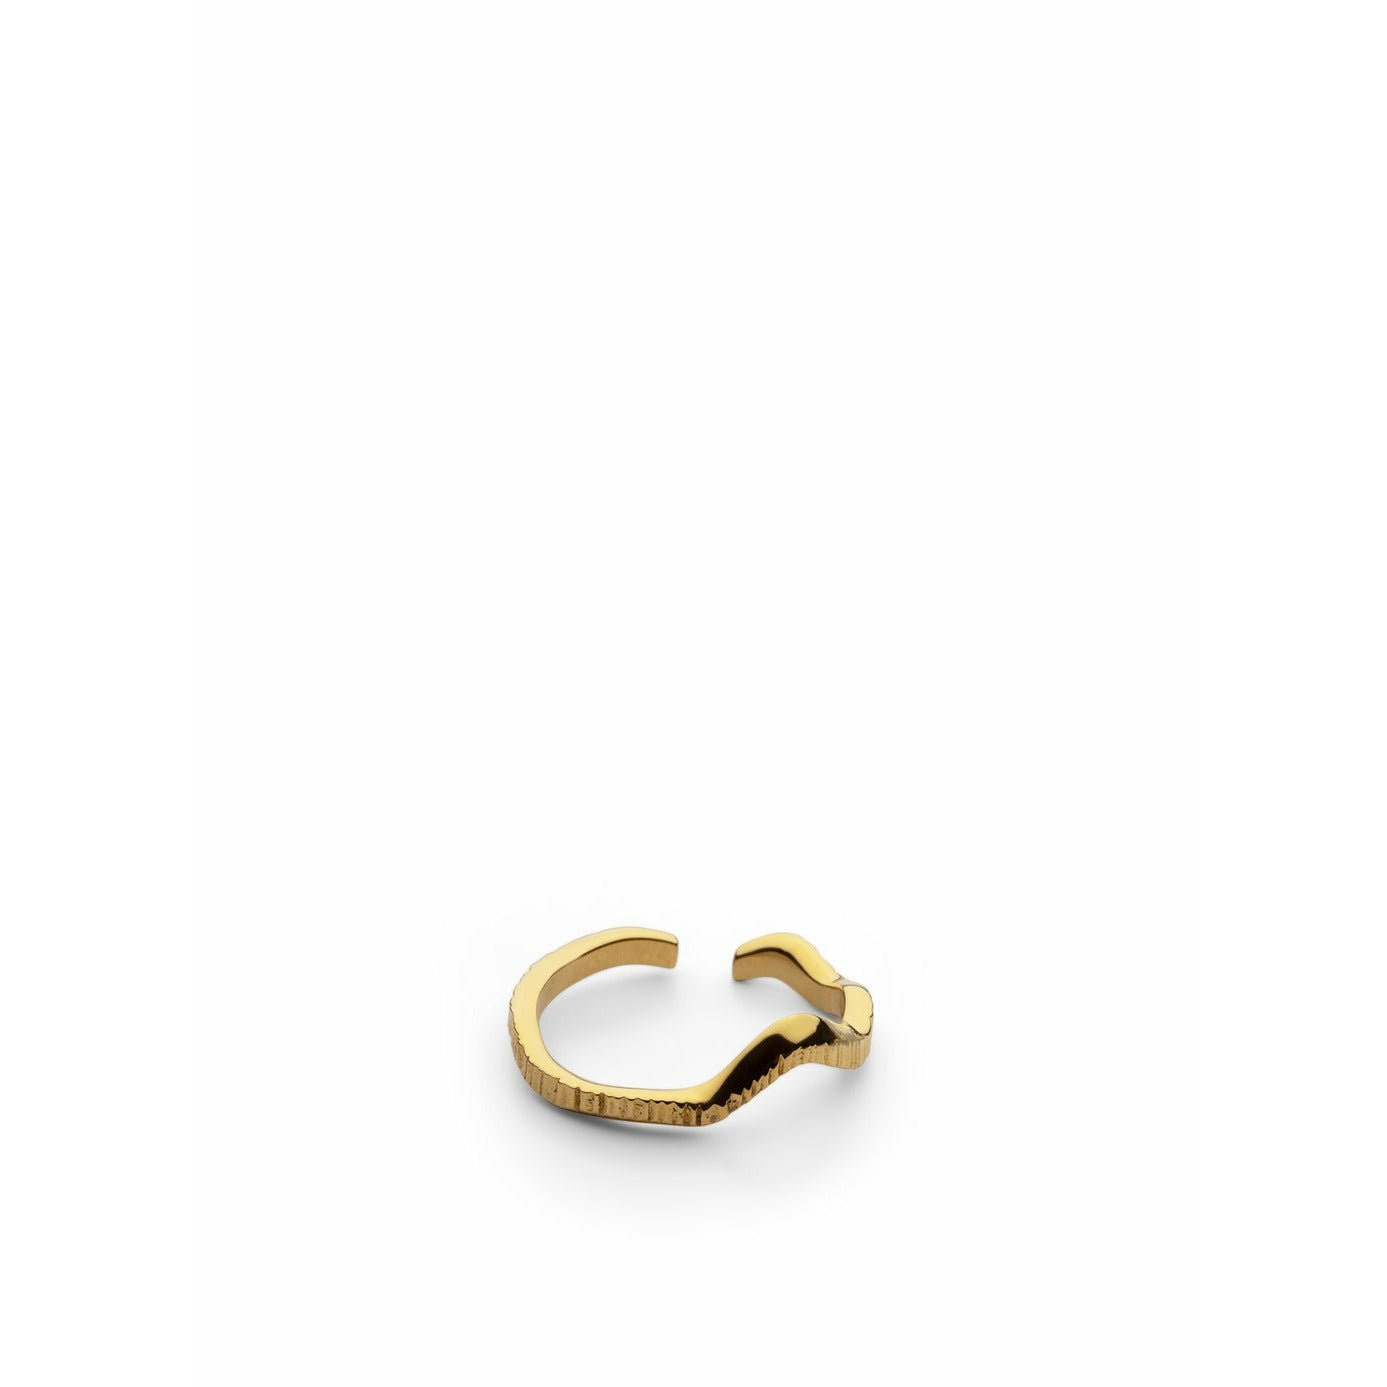 Skultuna Chêne Ring klein, vergoldet, Ø1,6 cm